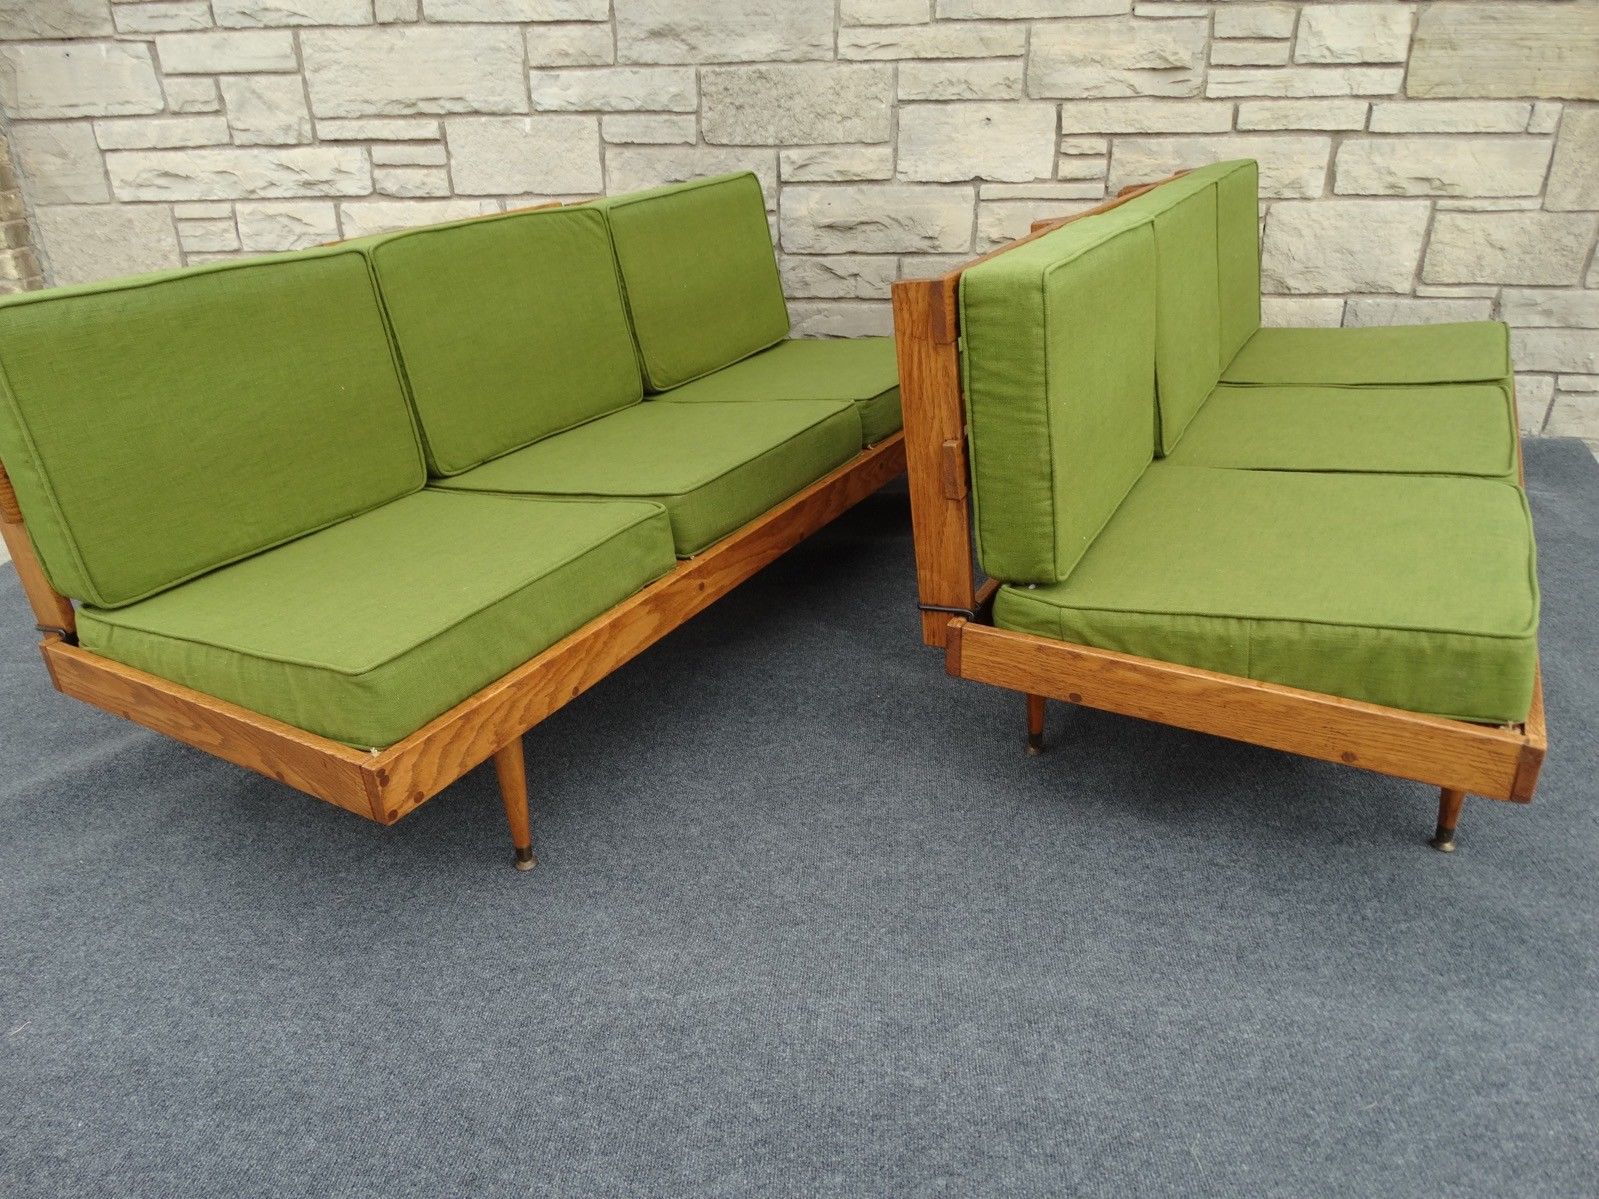 Pair of Mid Century Modern Oak & Avocado Green Floating Bench Settee Sofas